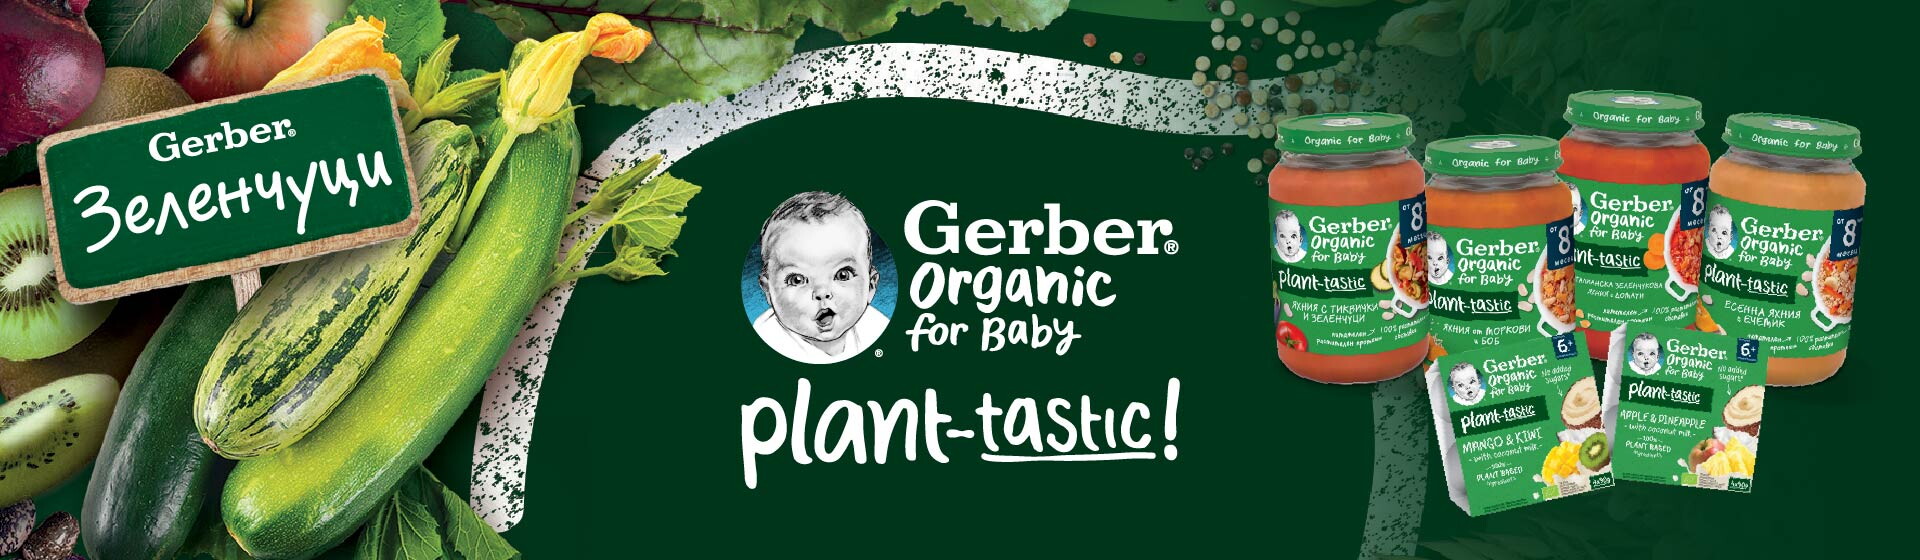 gerber_plant-tastic